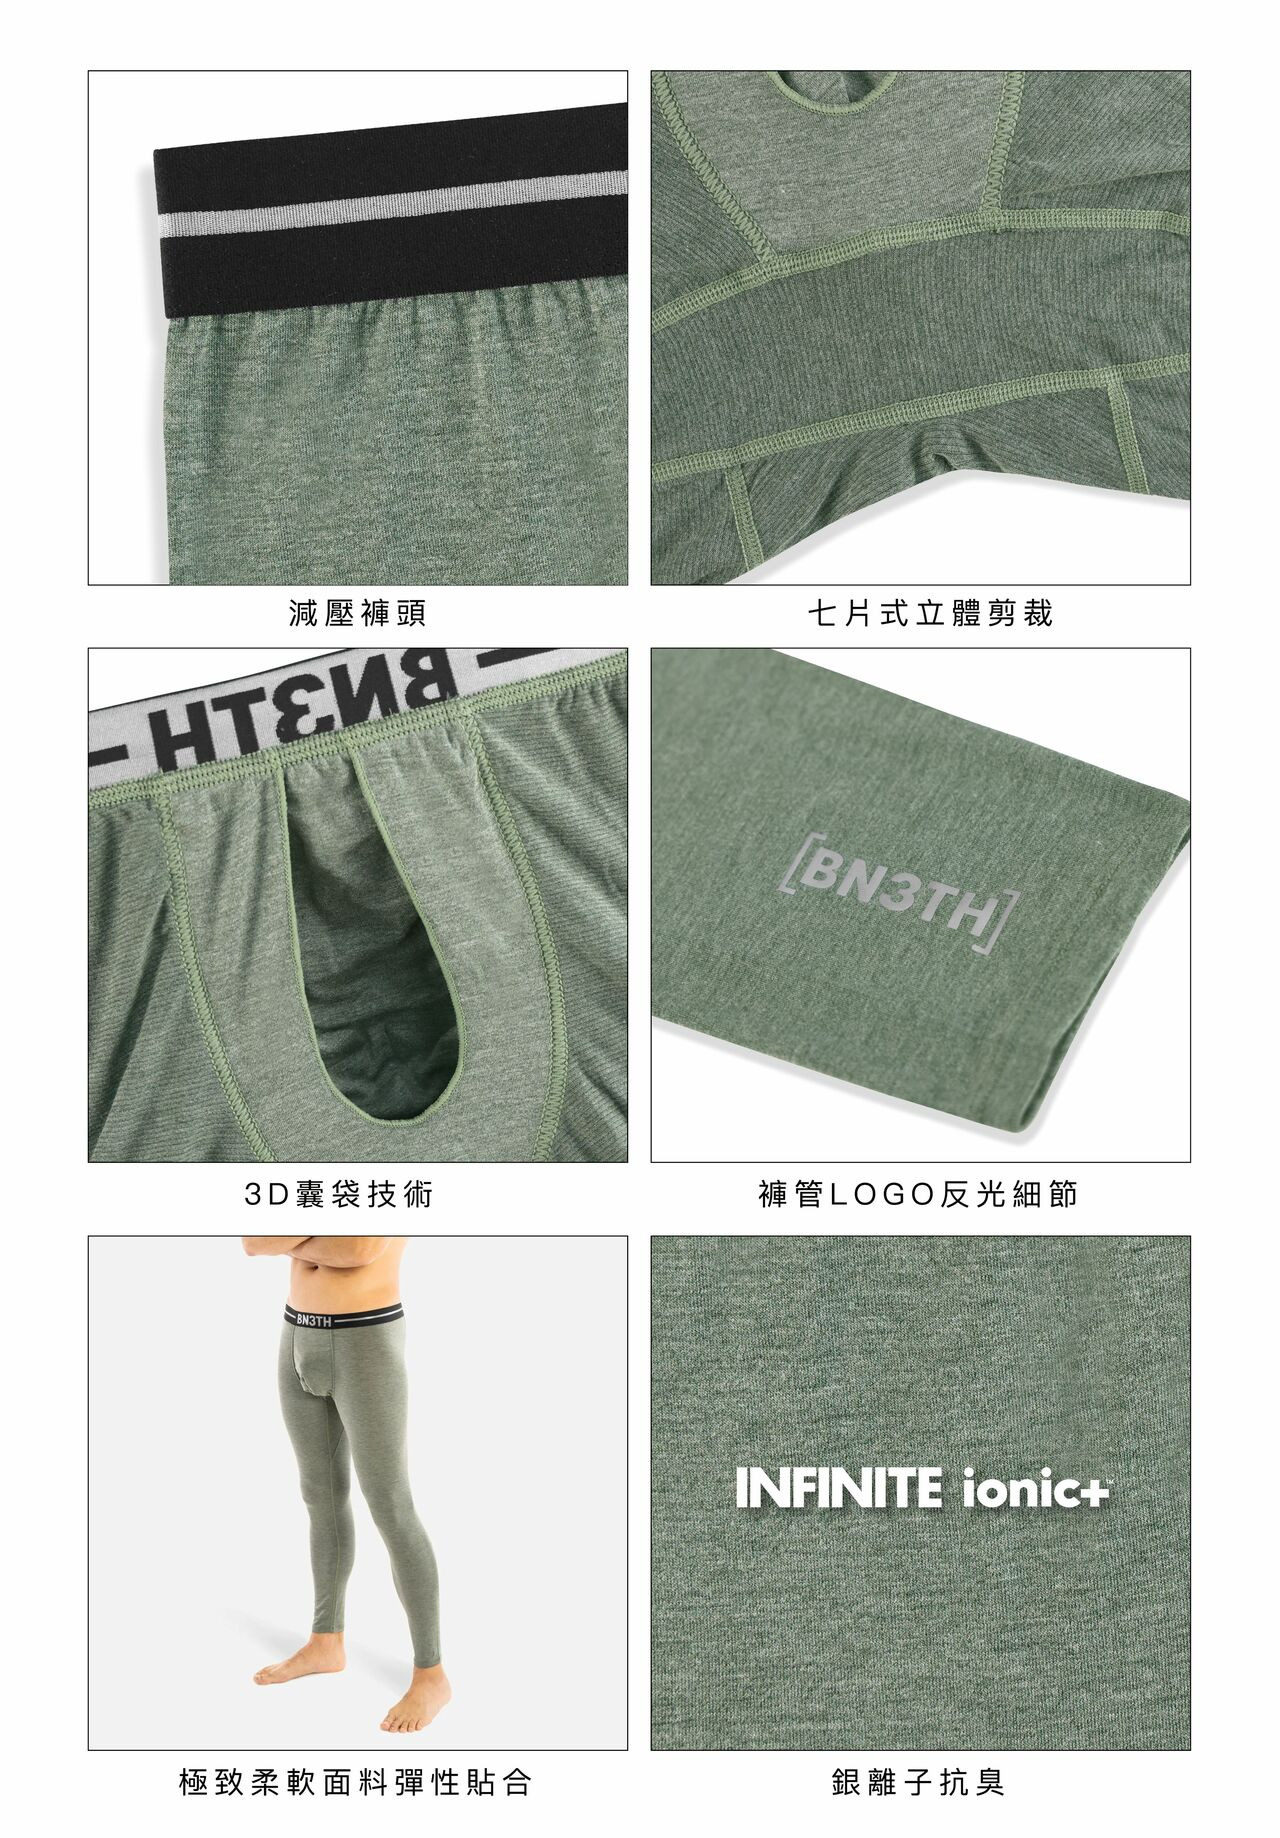 BN3TH 畢尼適 Infinite Ionic+™銀離子抗臭長褲-棉麻綠